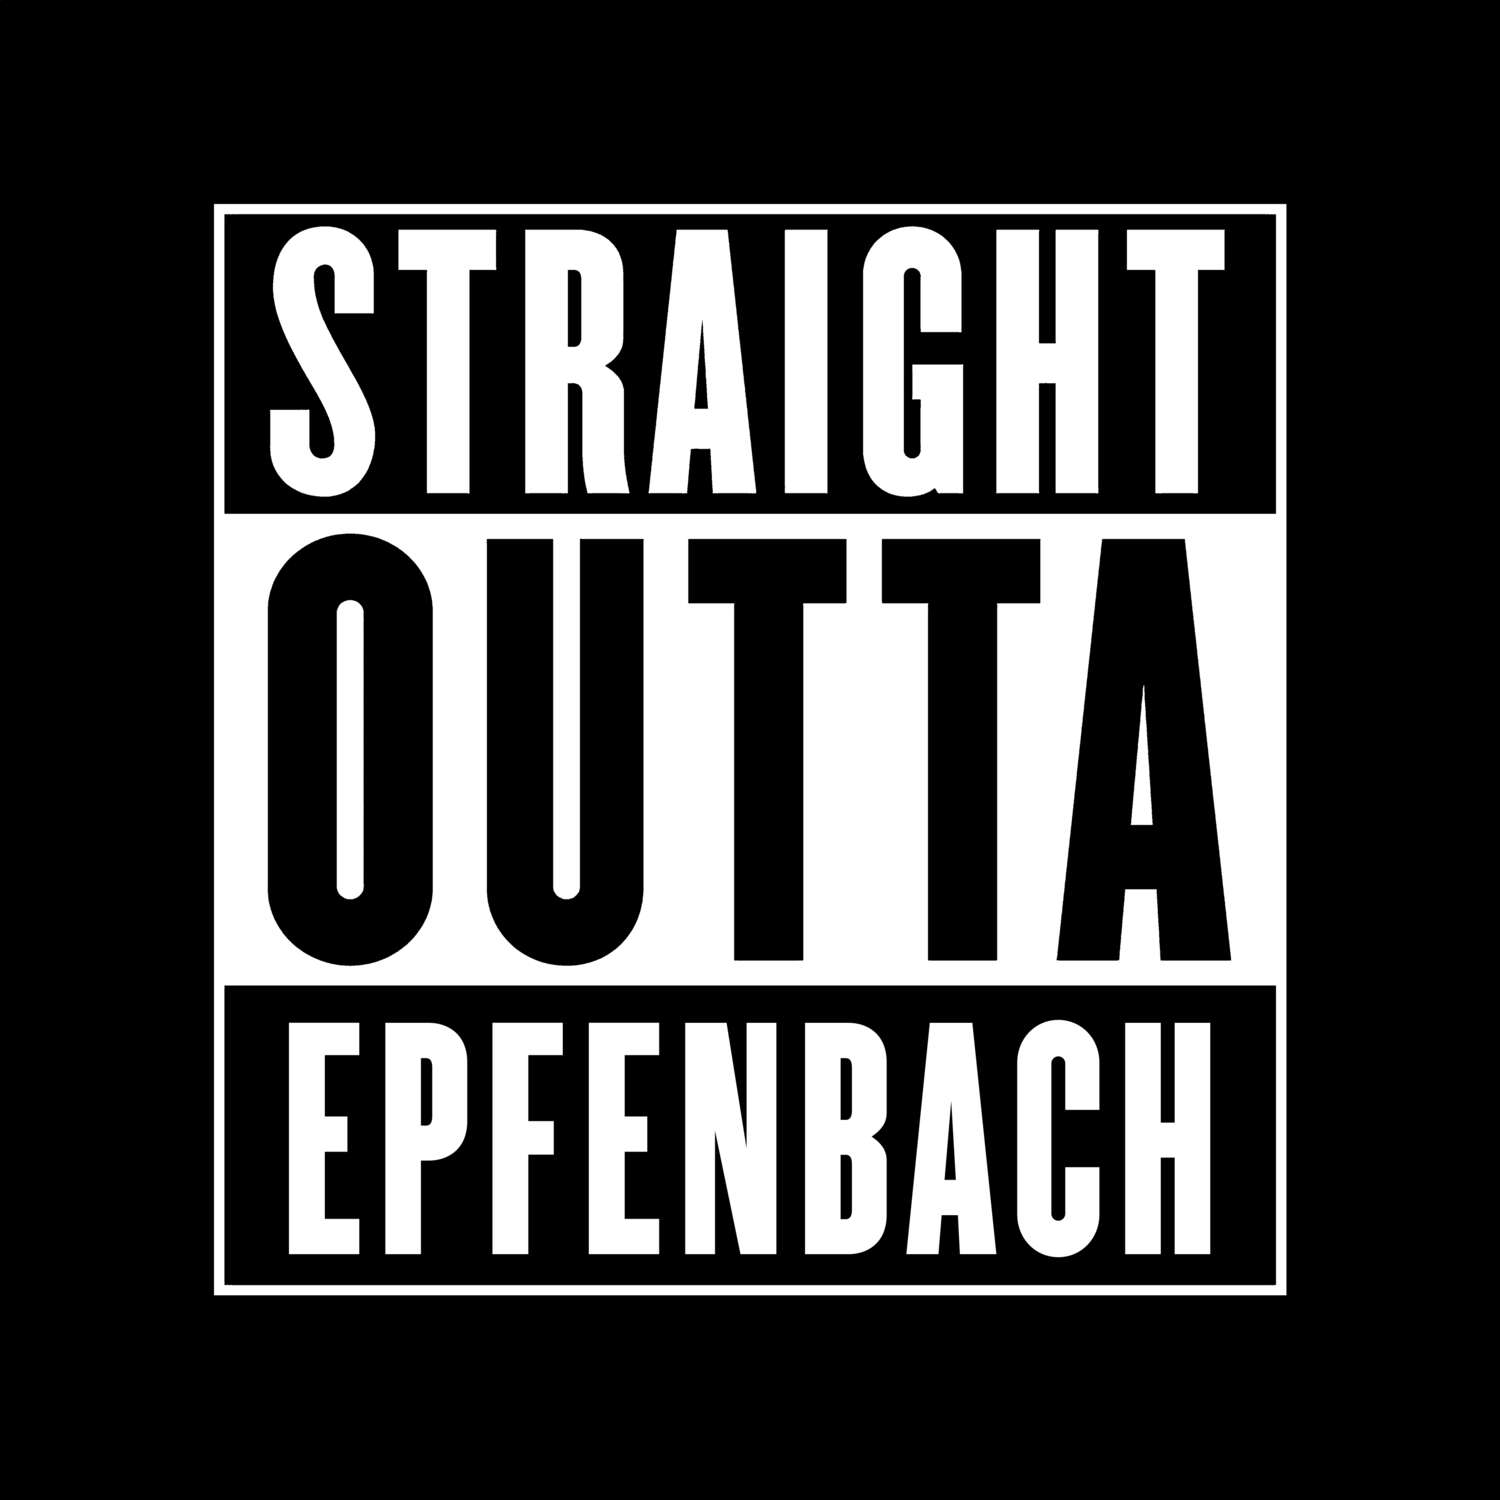 Epfenbach T-Shirt »Straight Outta«